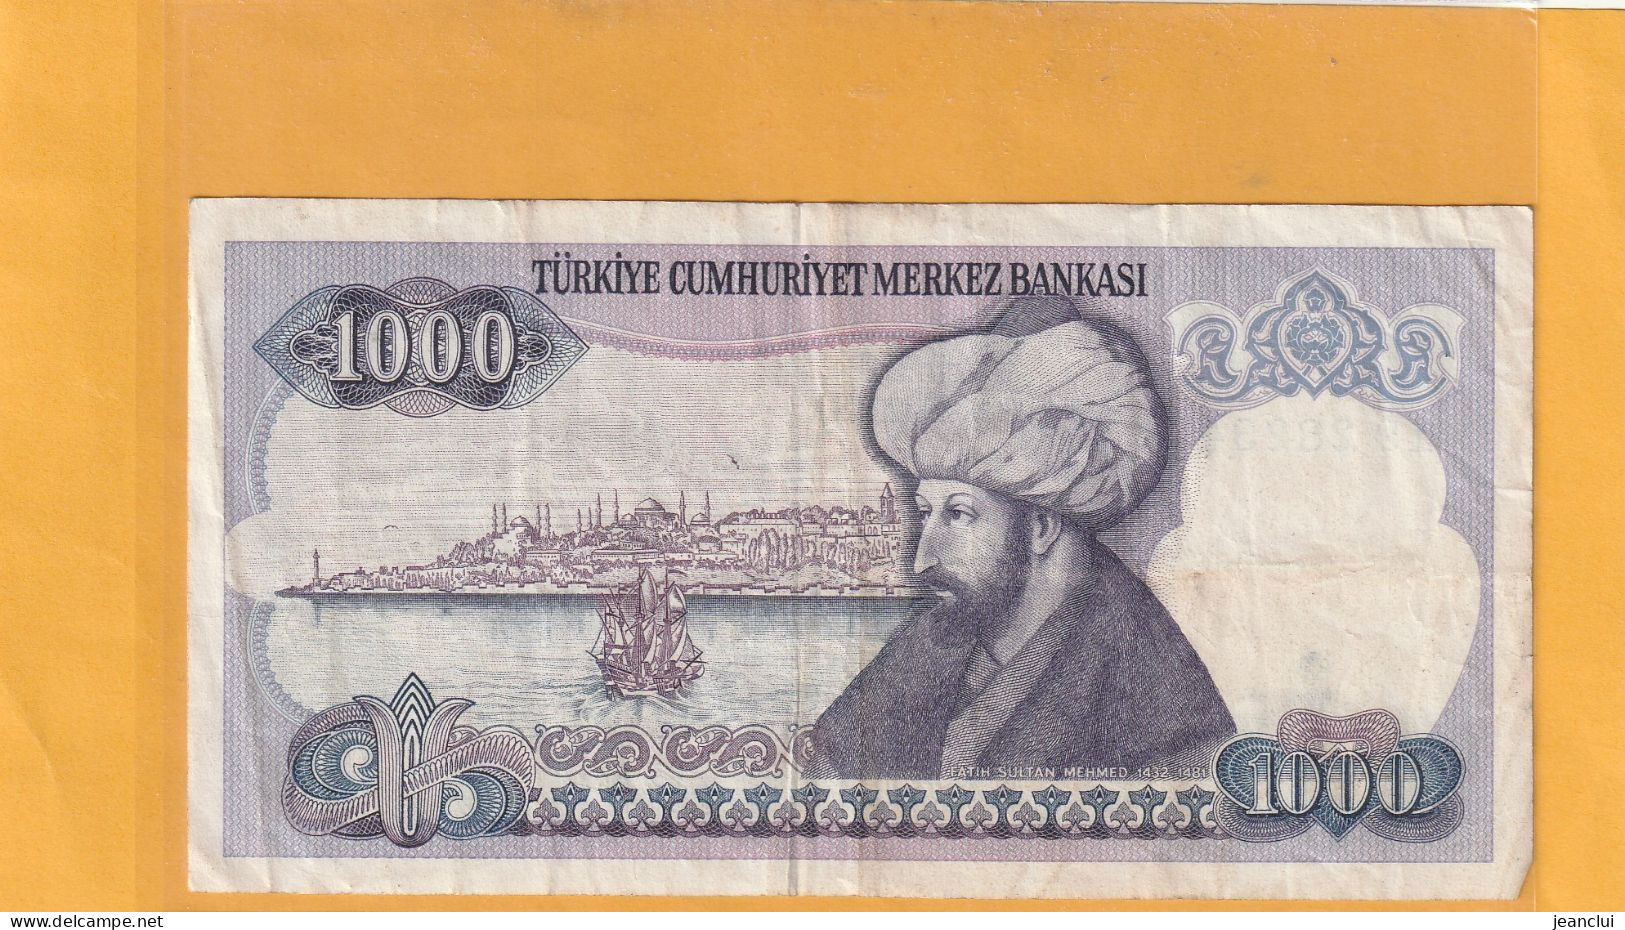 TURKIYE CUMHURIYET MERKEZ BANKASI . 1.000 LIRA . 14 OCAK 1970  . N°  A19 282347 .  2 SCANNES  .  BILLET USITE - Turkey